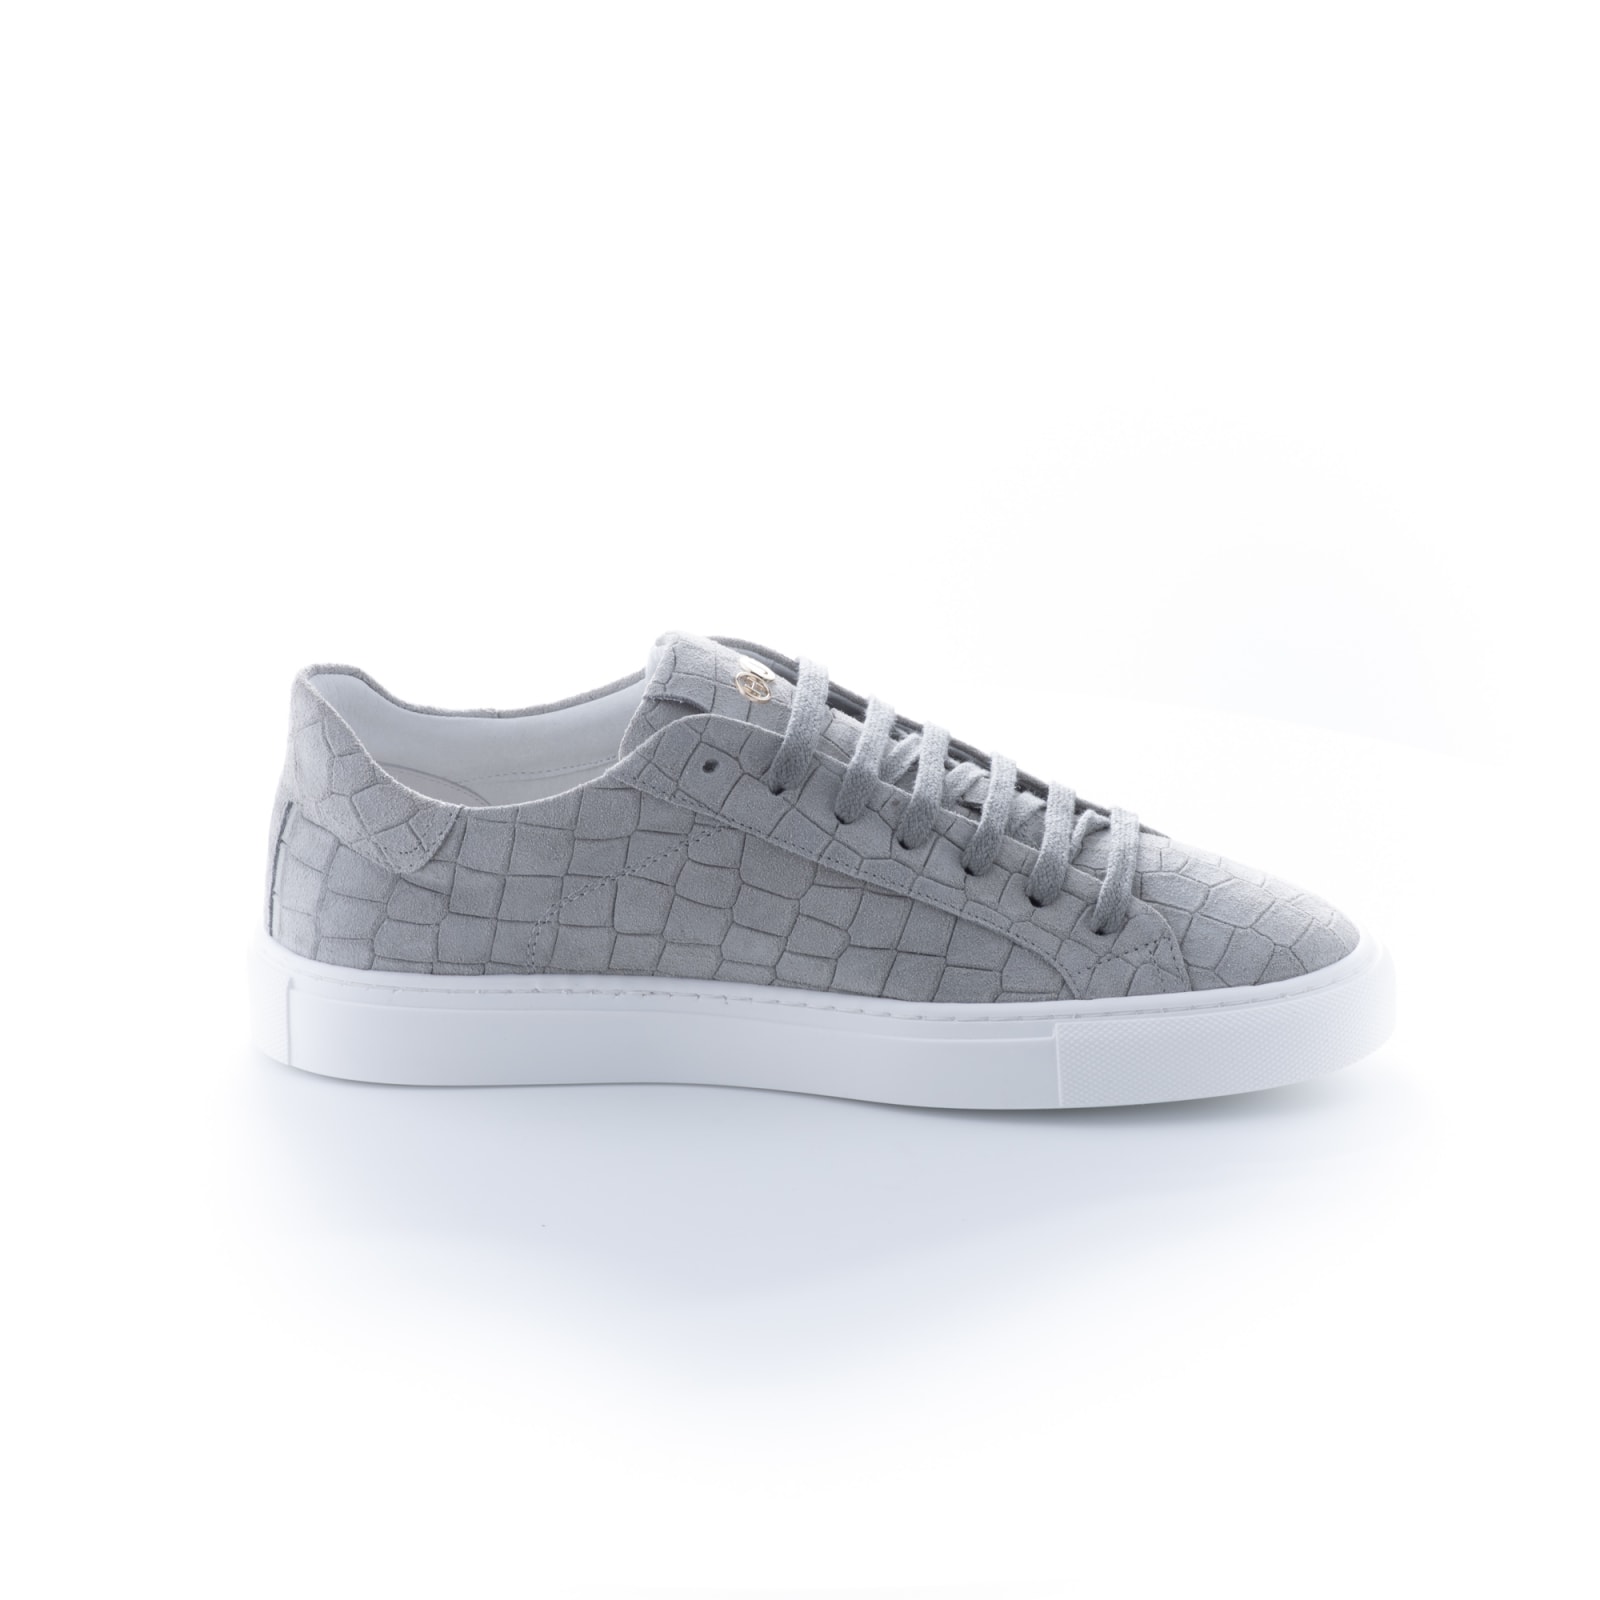 Hide & Jack Essence Grey White Sneakers